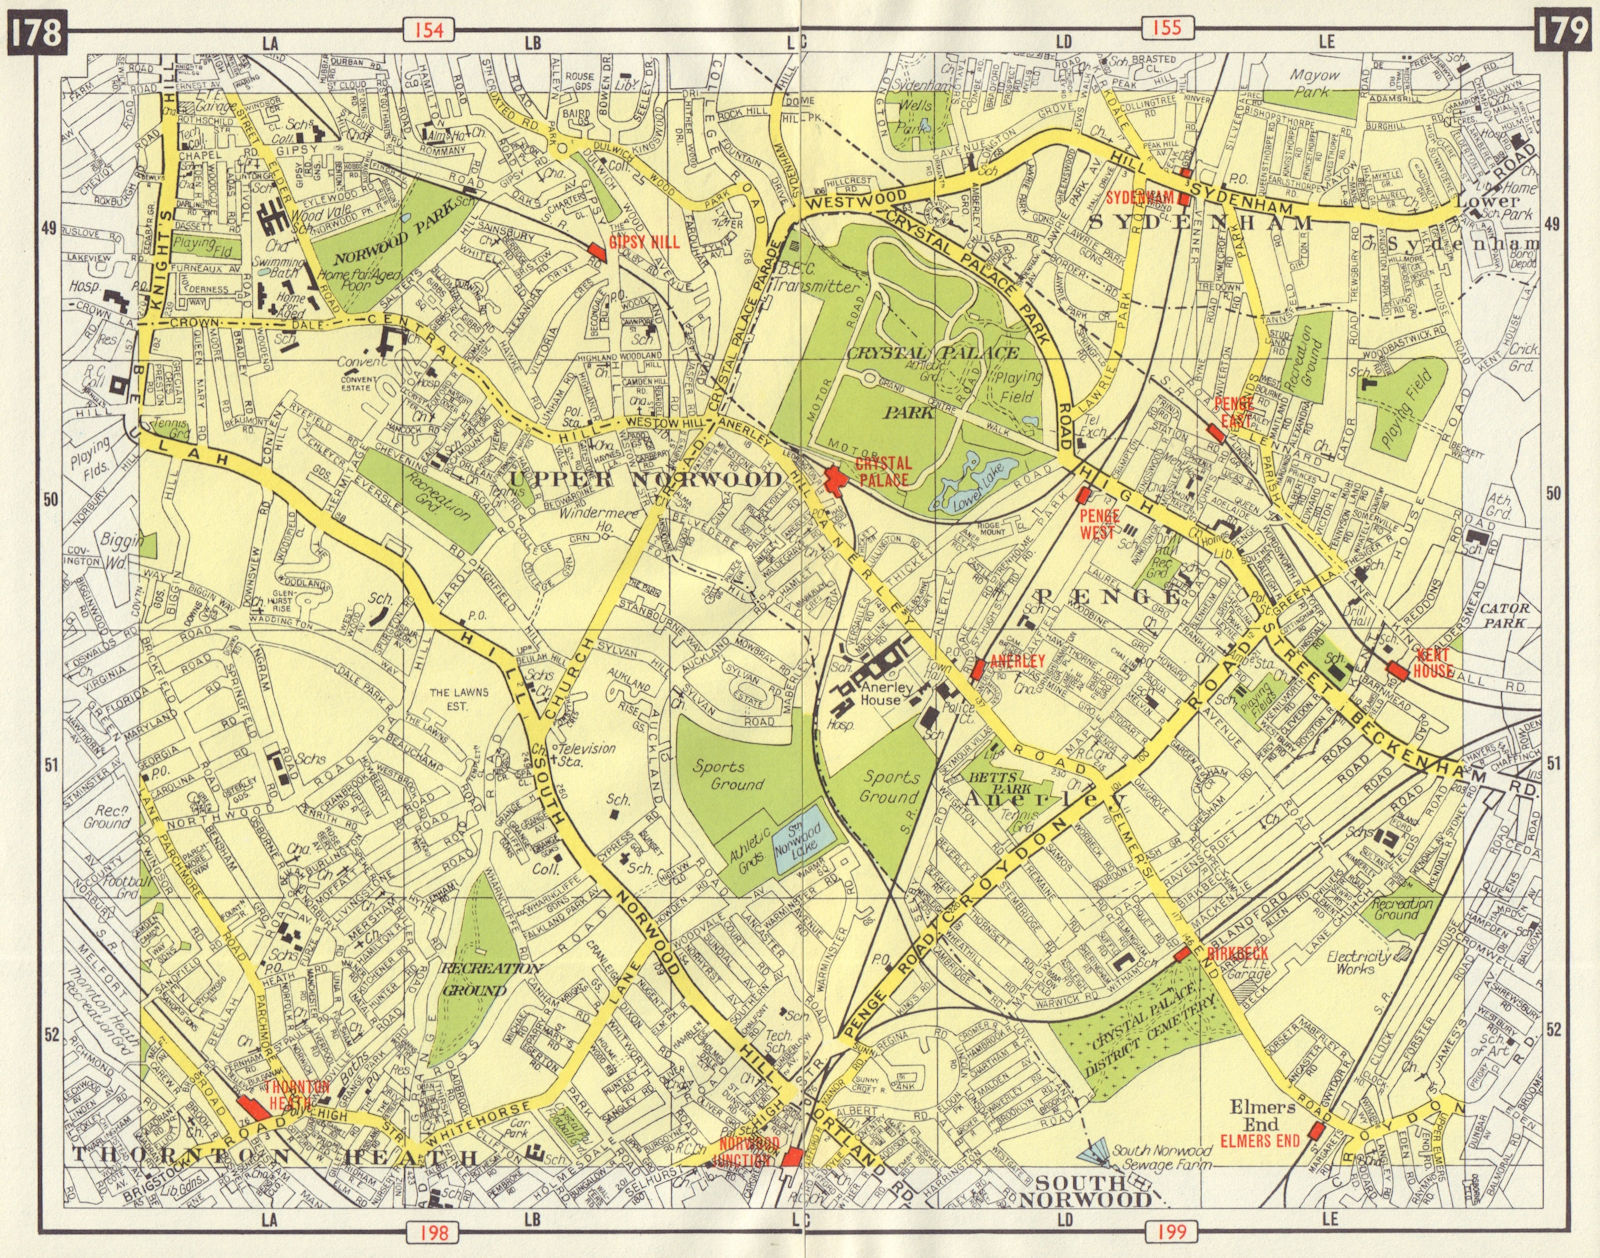 S LONDON Upper/South Norwood Sydenham Thornton Heath Anerley Penge 1965 map